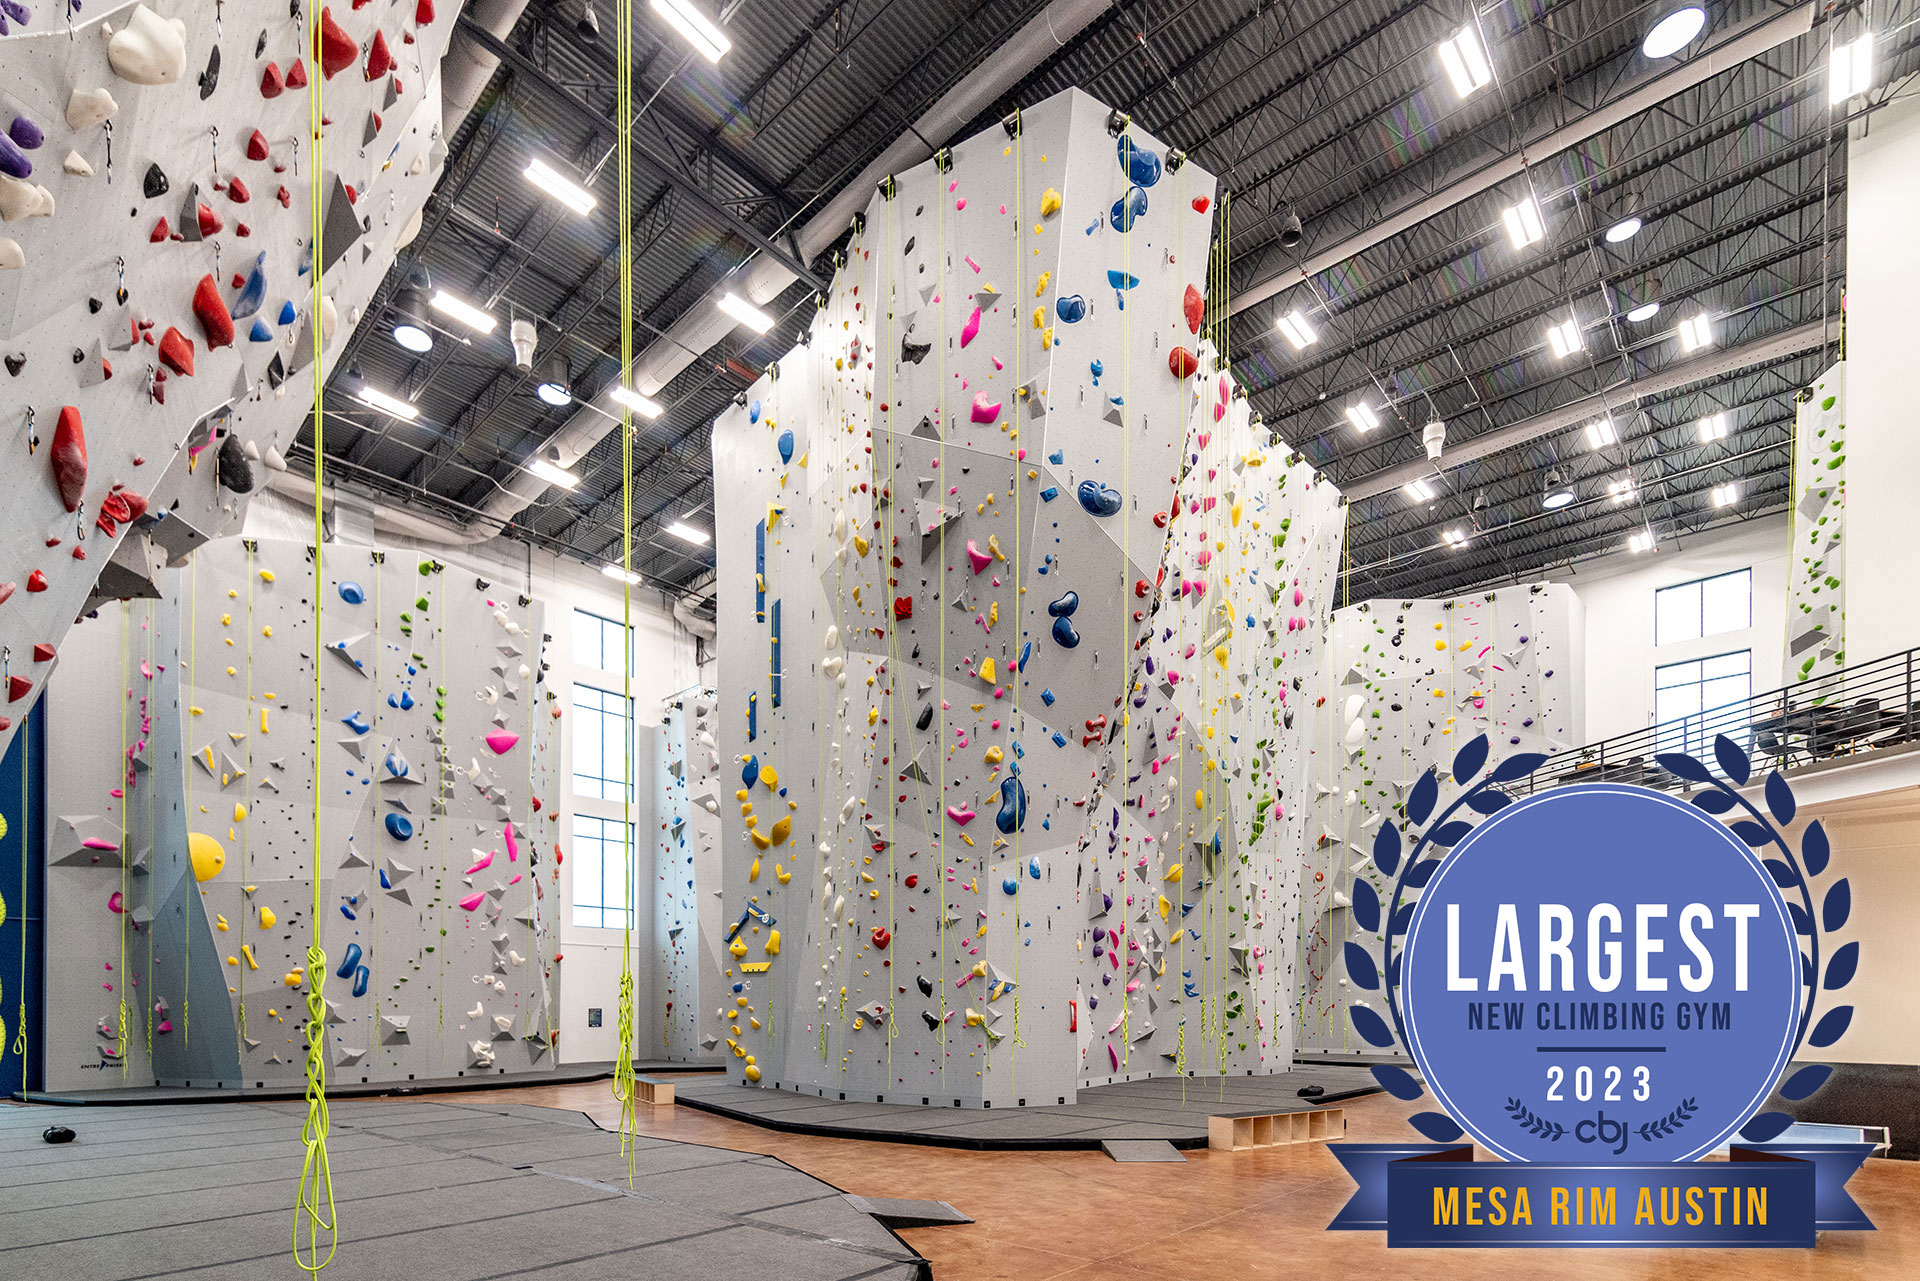 2023 CBJ Gym List Award - Tallest New Climbing Gym - Mesa Rim Austin